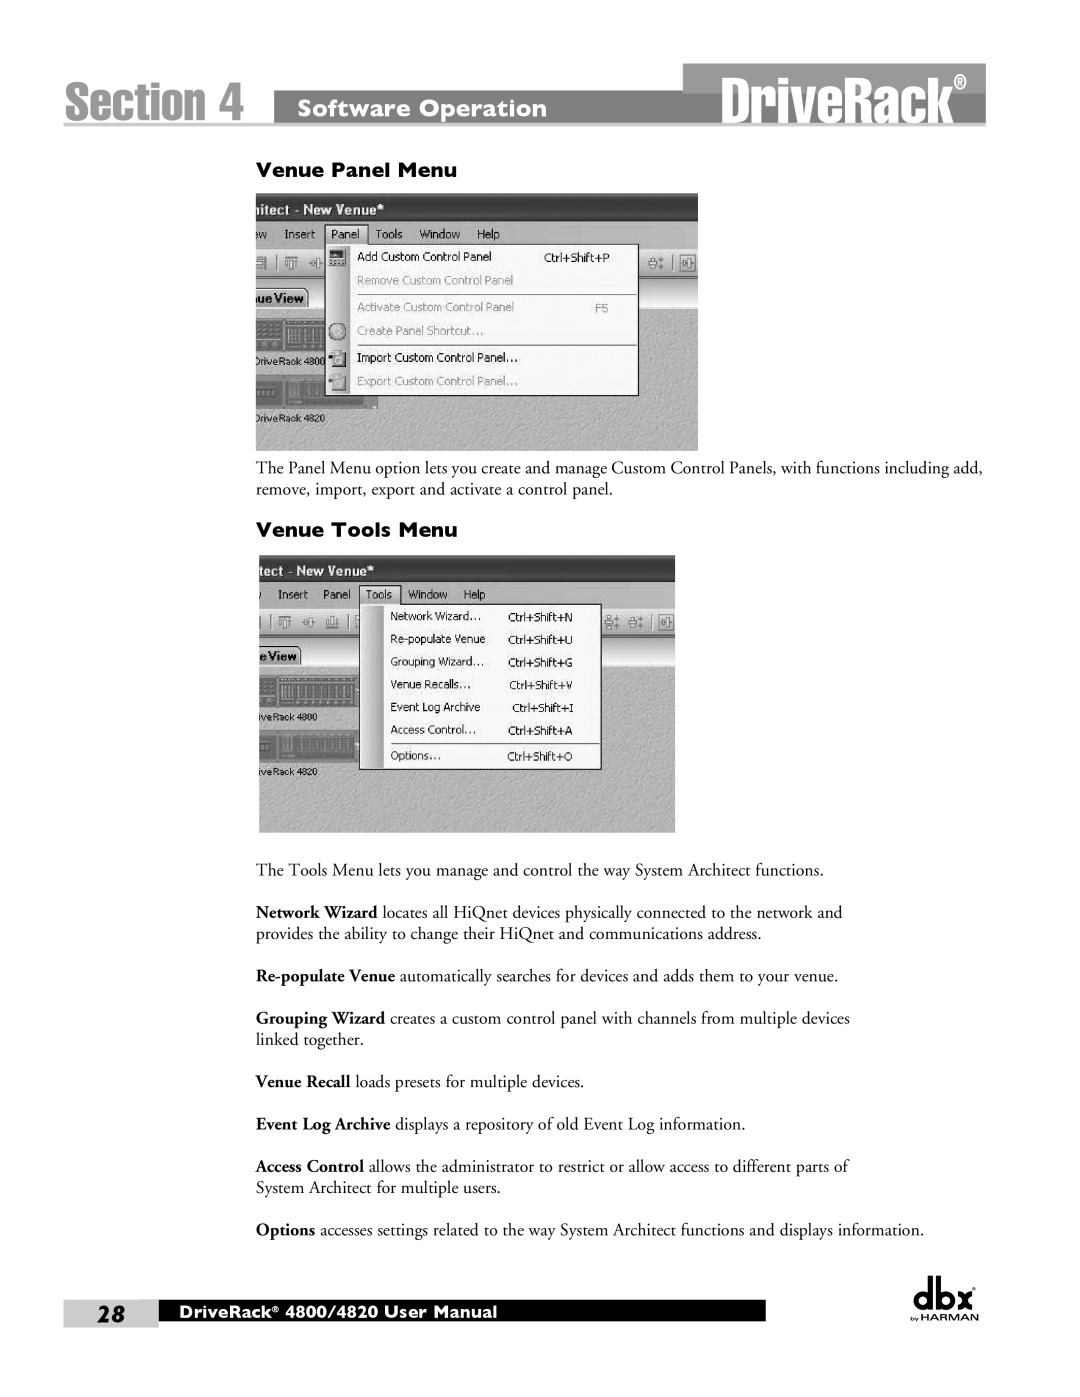 Harman user manual Section, Software Operation, Venue Panel Menu, Venue Tools Menu, DriveRack 4800/4820 User Manual 